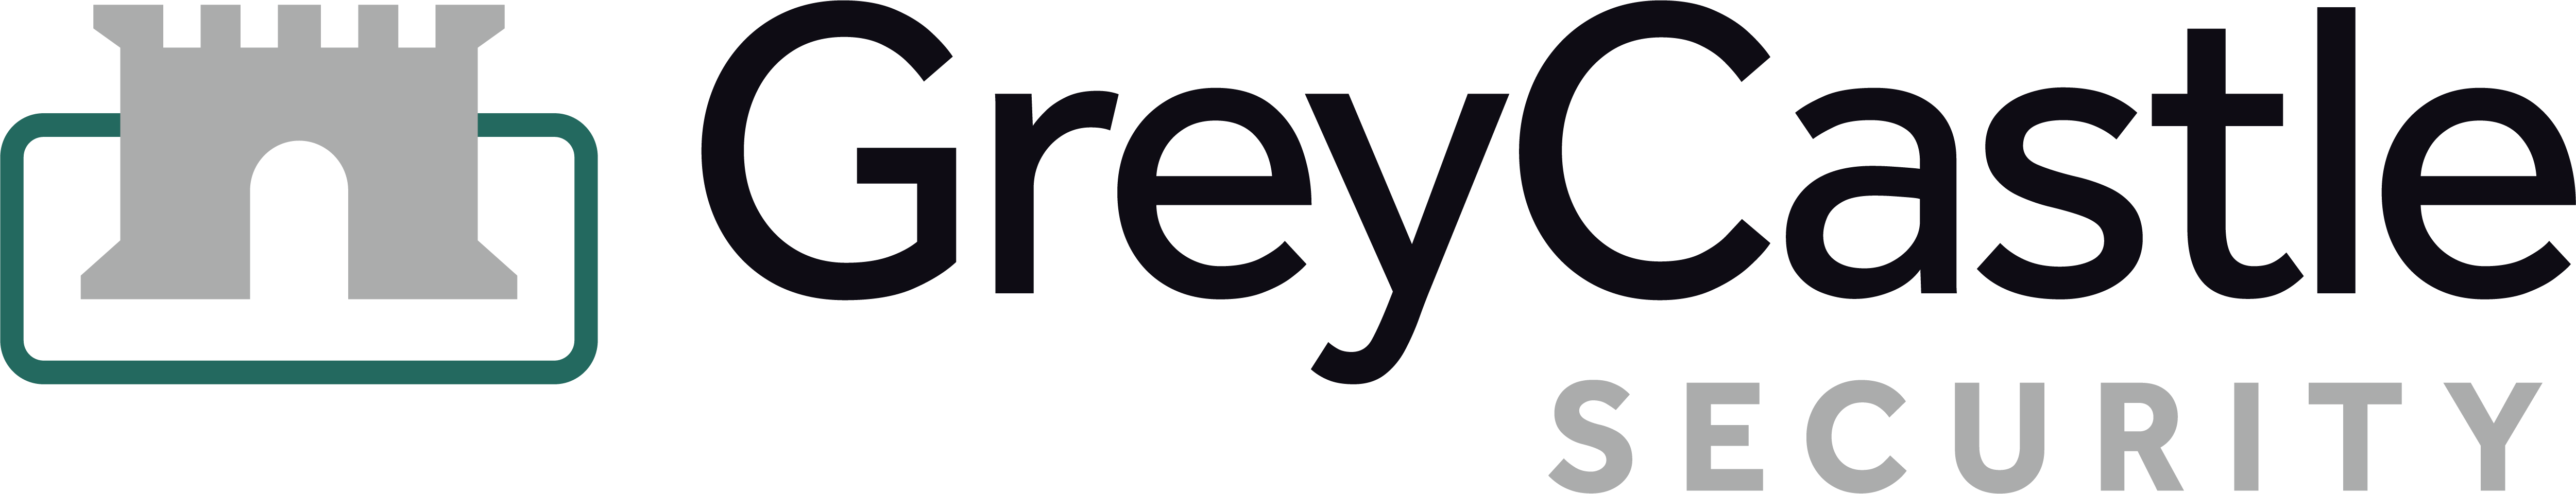 GreyCastle Security logo